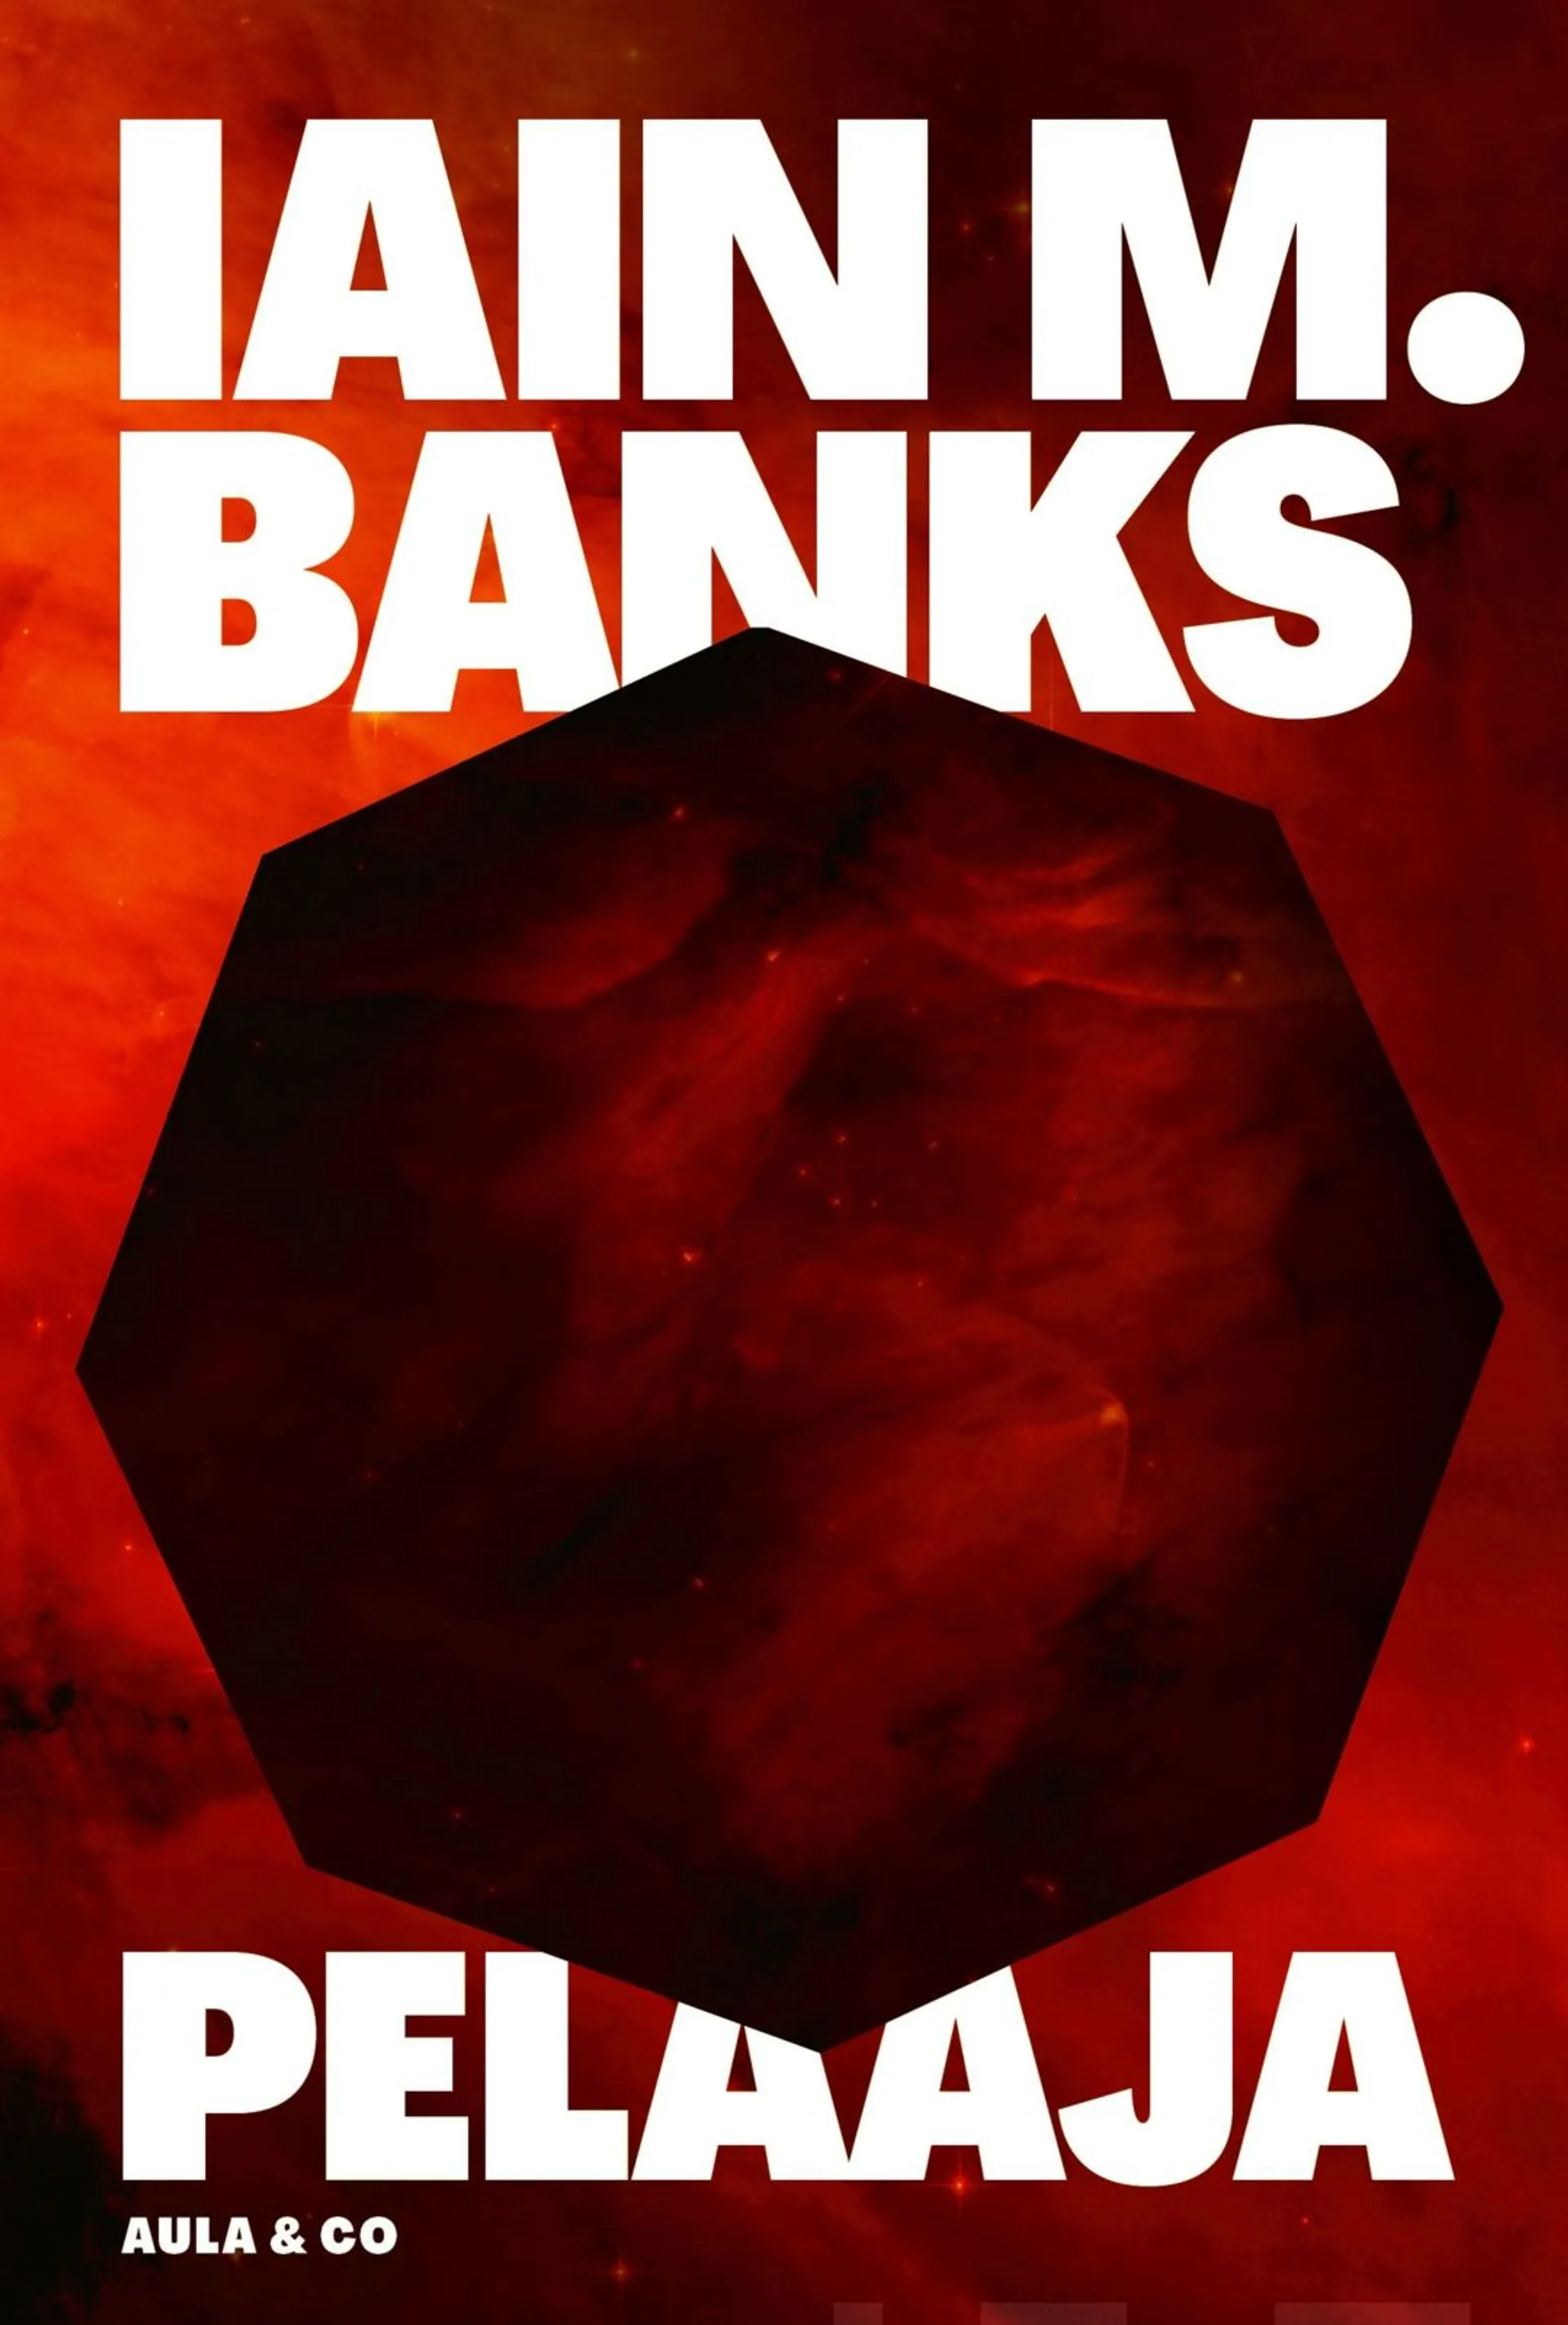 Banks, Pelaaja